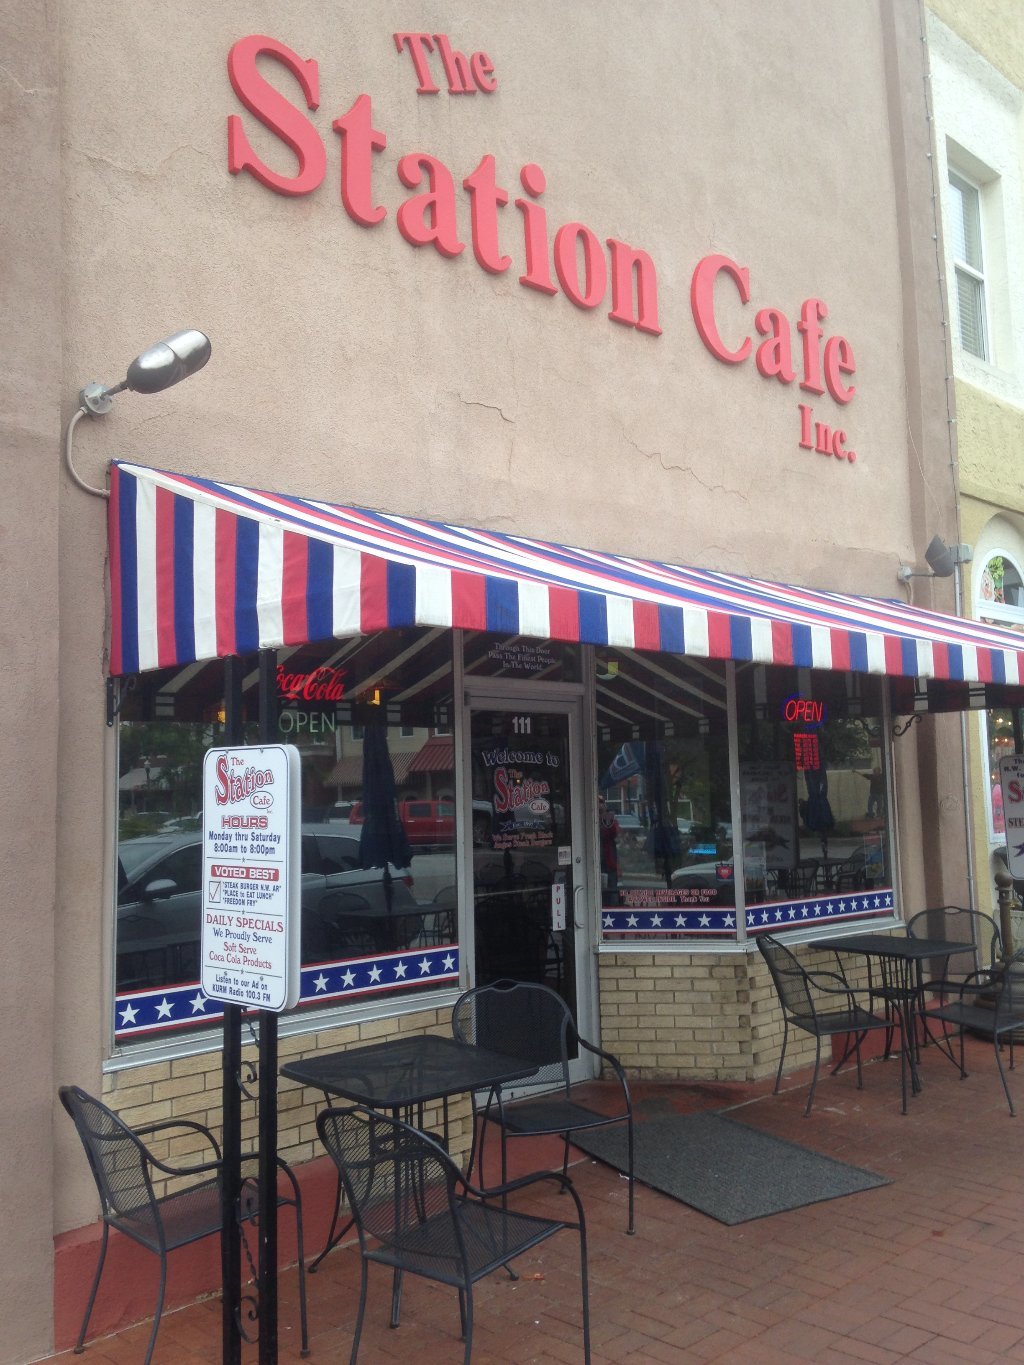 The Station Cafe